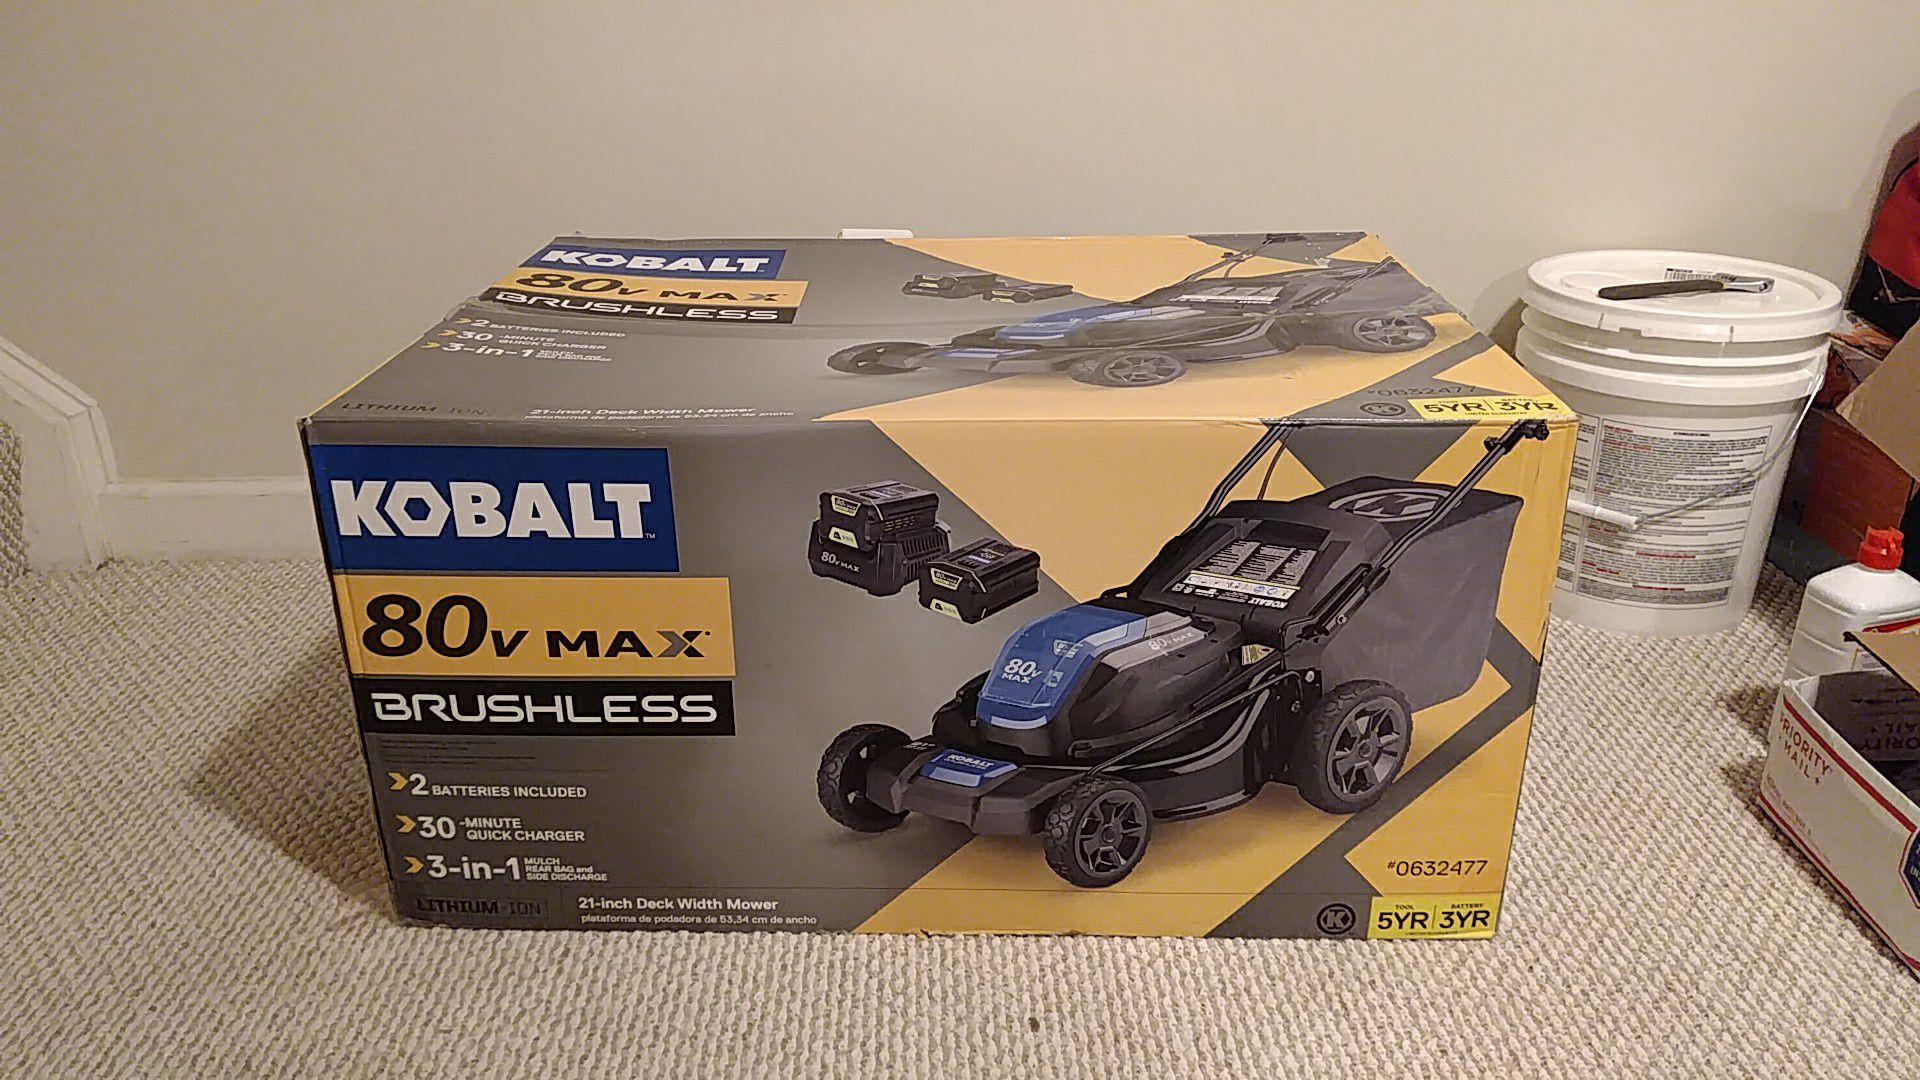 Kobalt 80v electric lawn mower